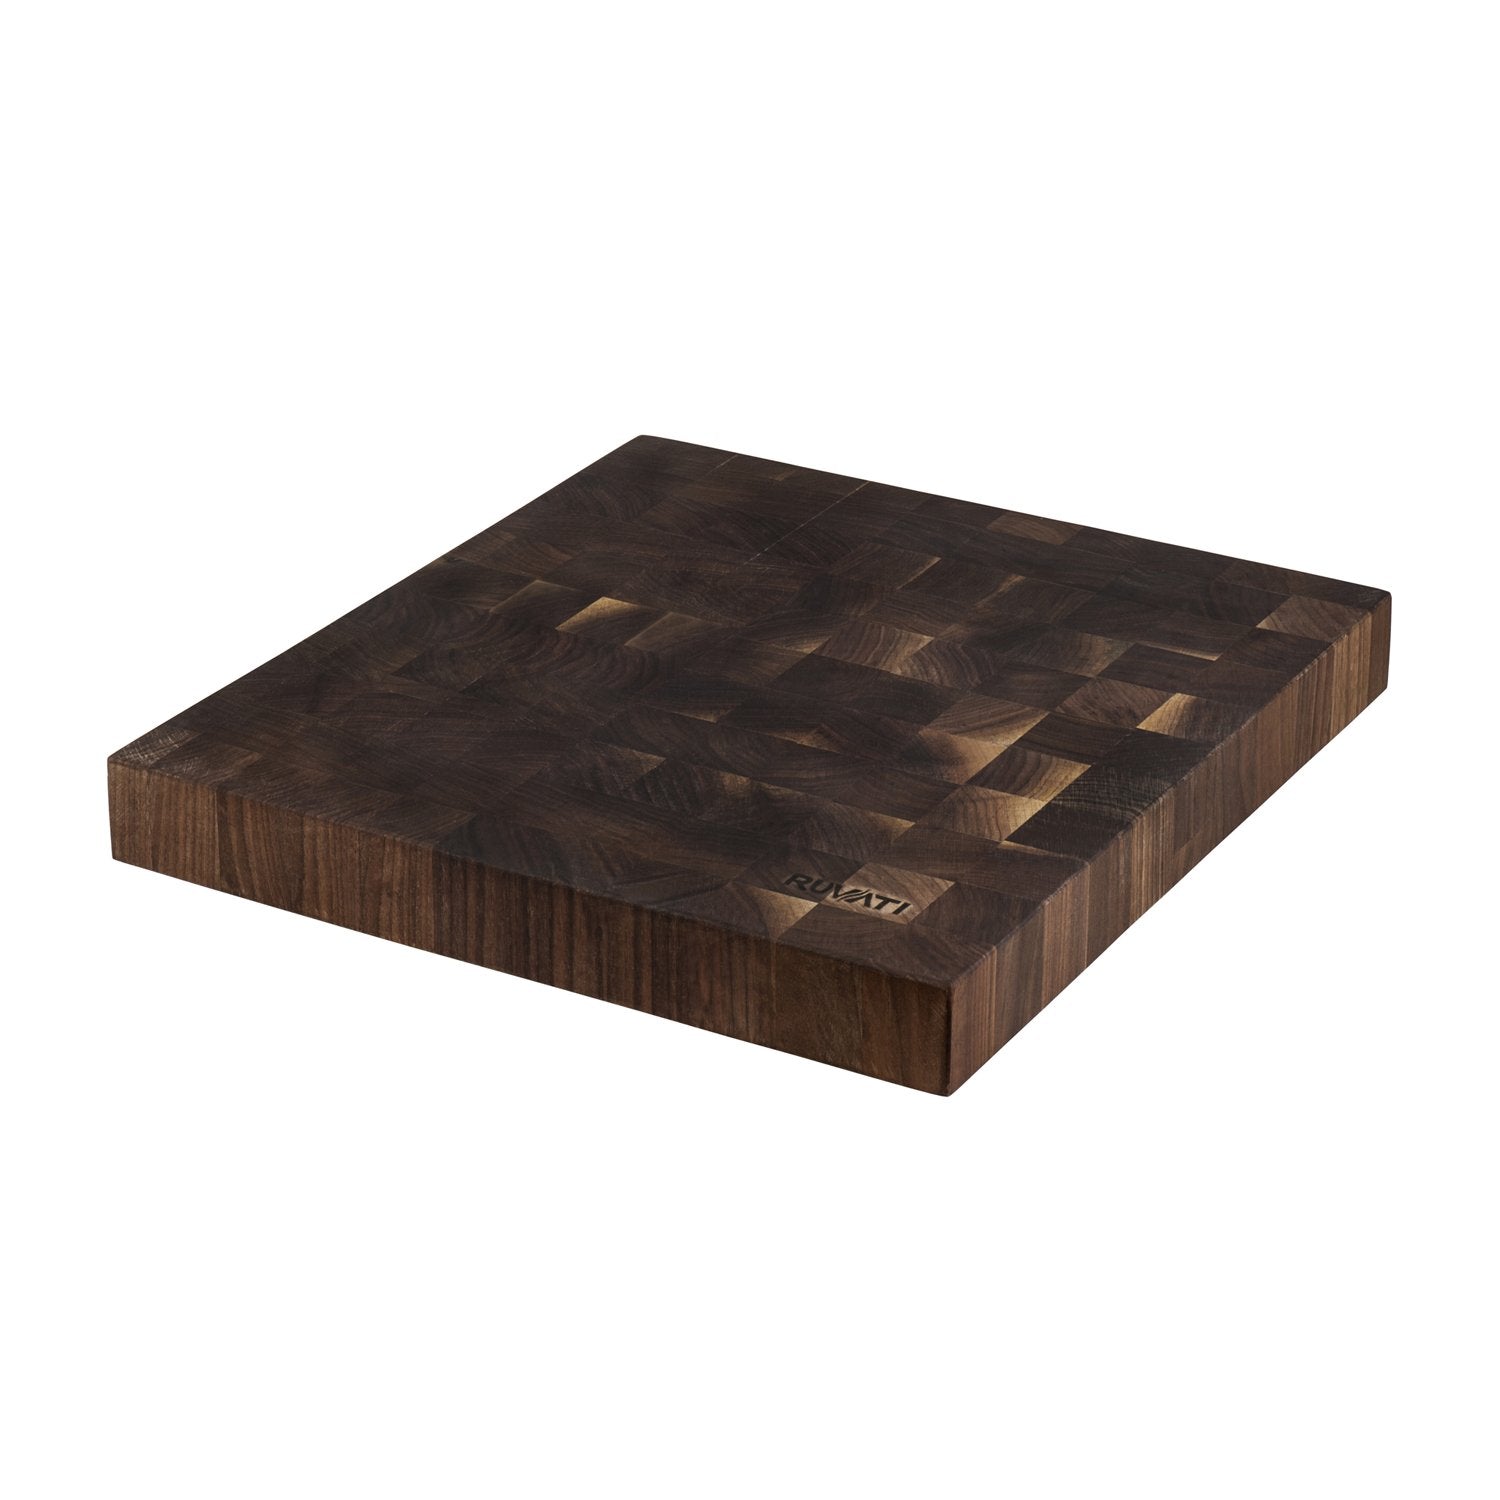 17 x 16 x 2 inch thick End Grain Acacia Butcher Block Solid Wood